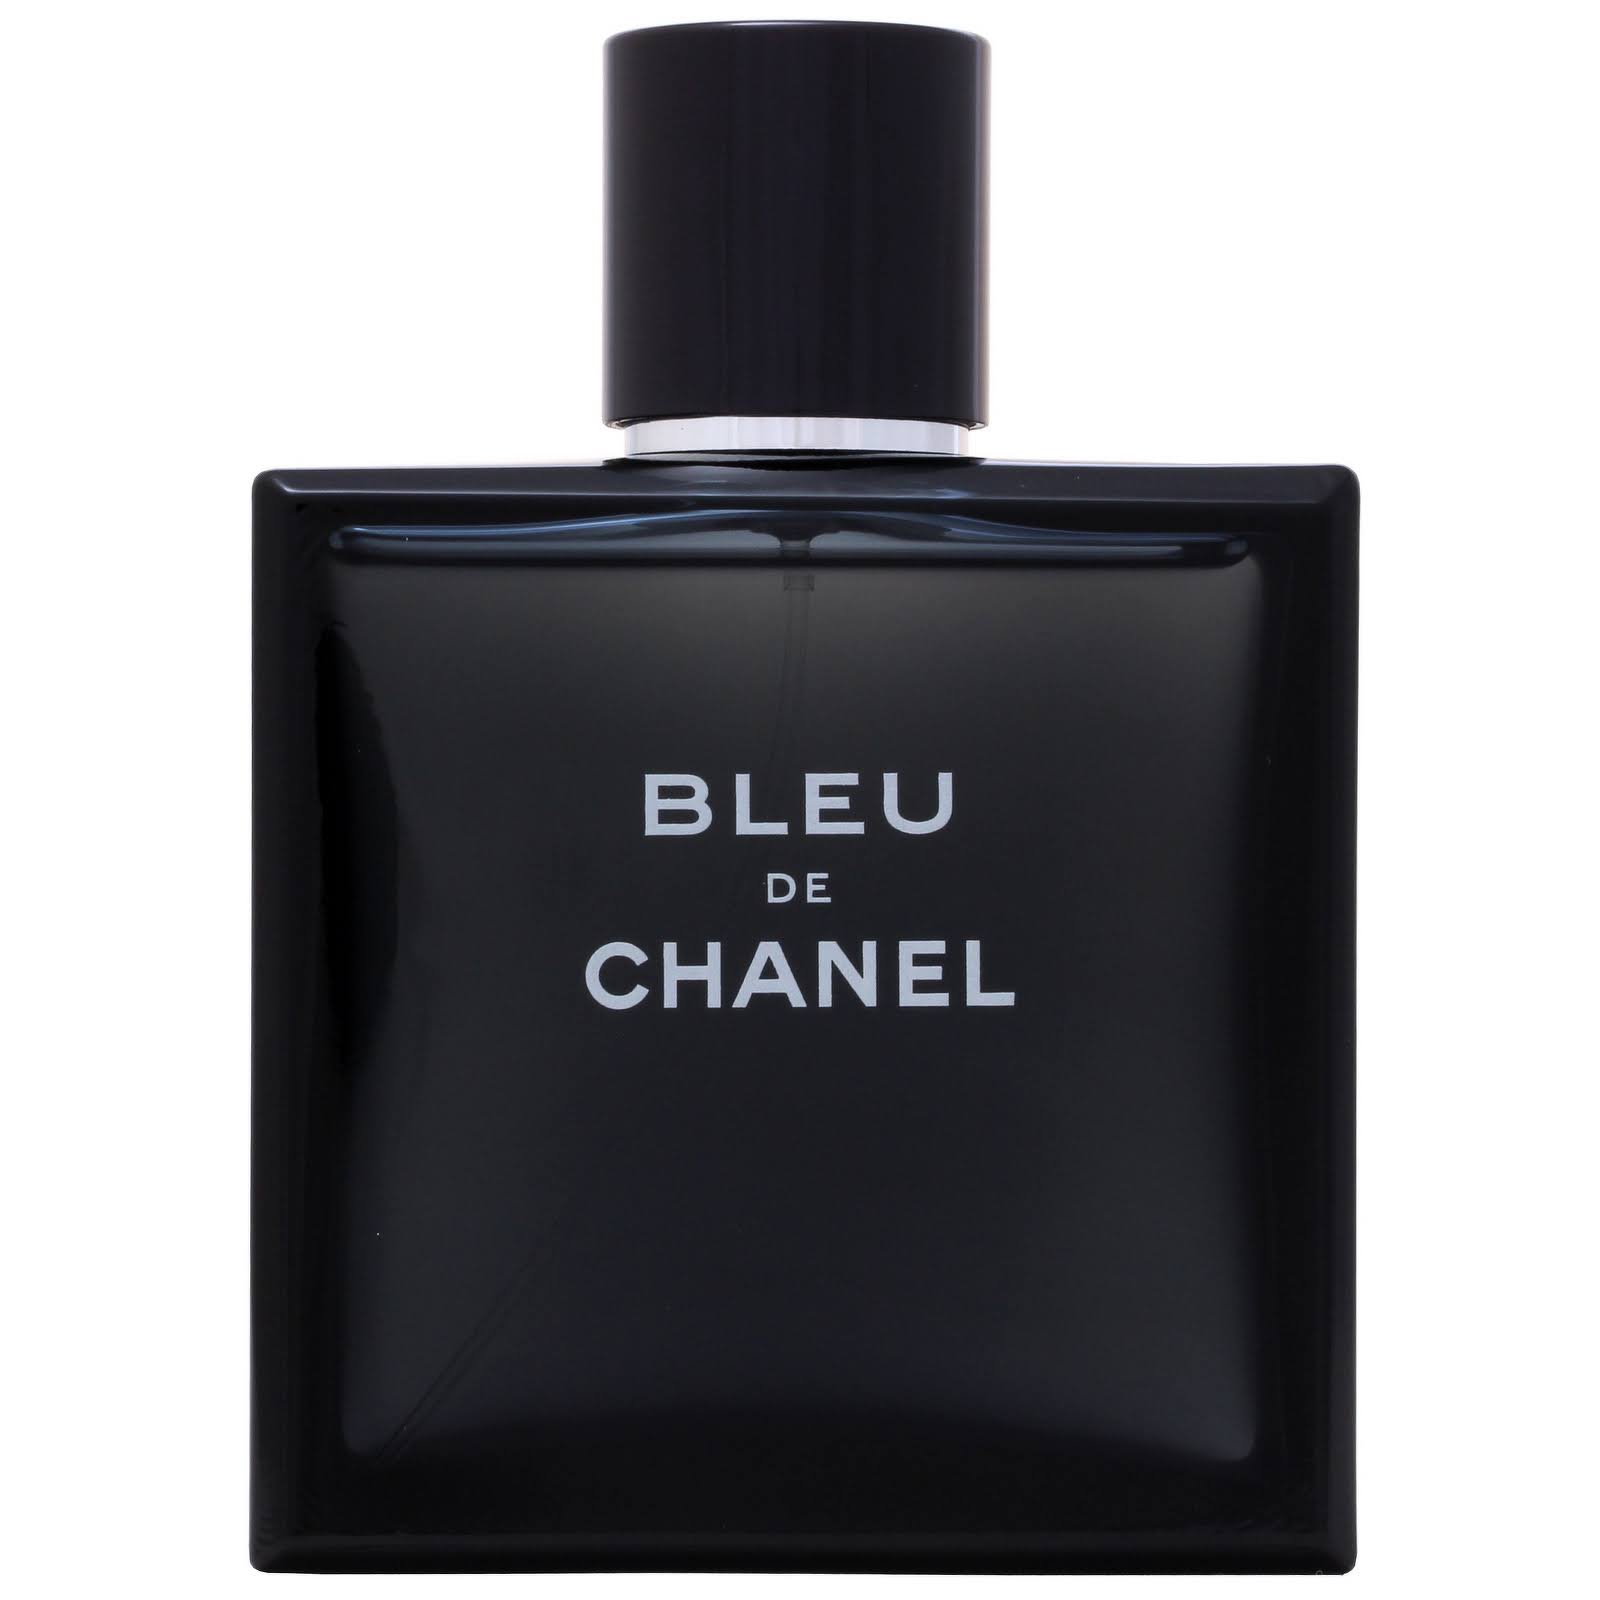 Chanel Bleu de Chanel for Men Eau de Toilette Spray - 100ml